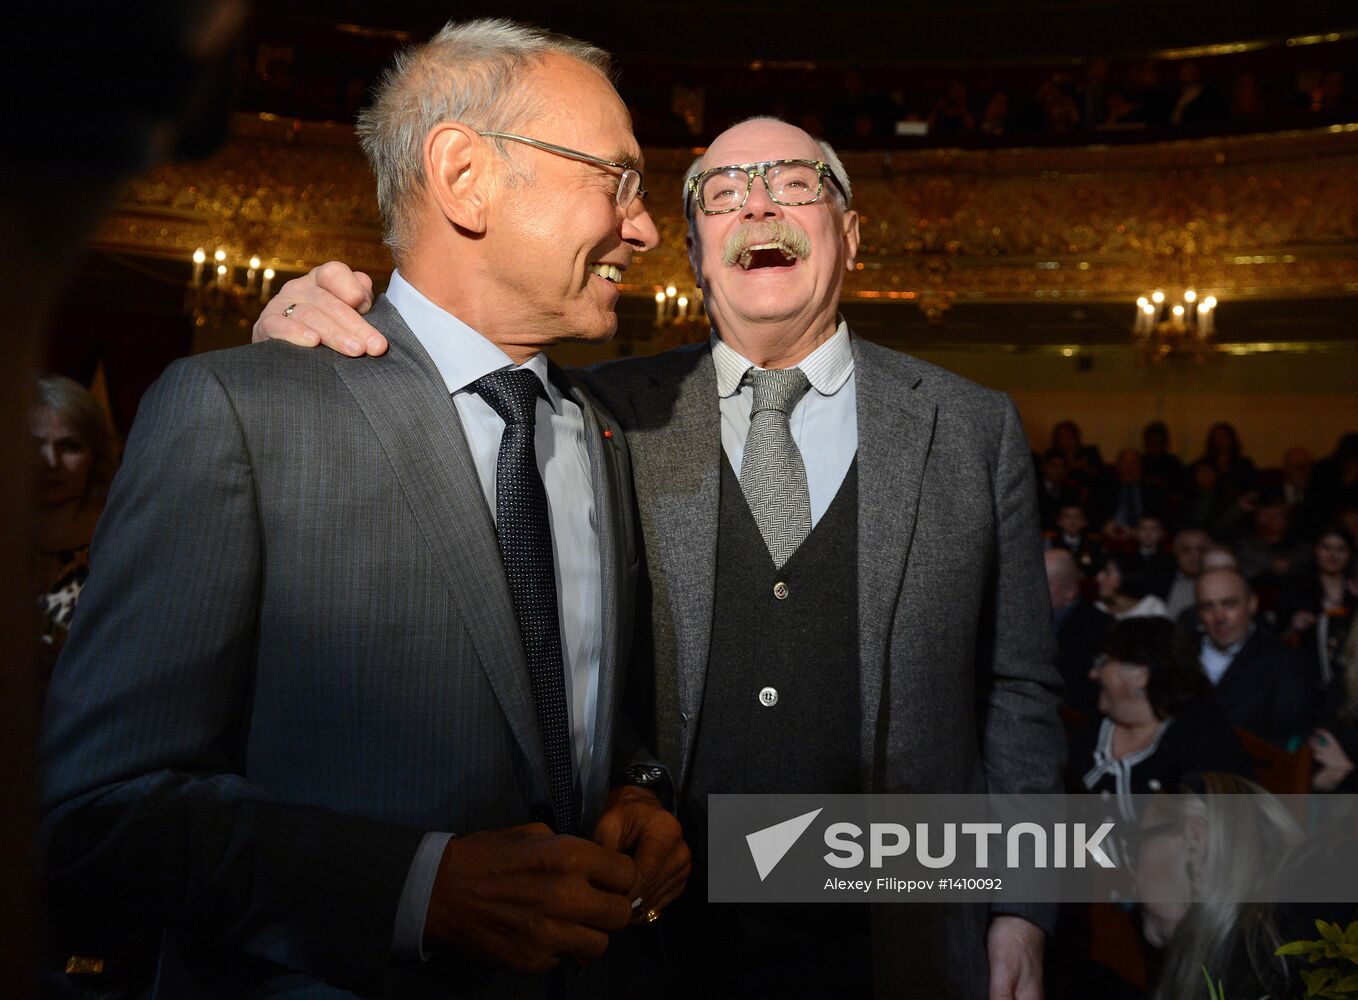 Gala evening marks Sergei Mikhalkov's 100th birthday